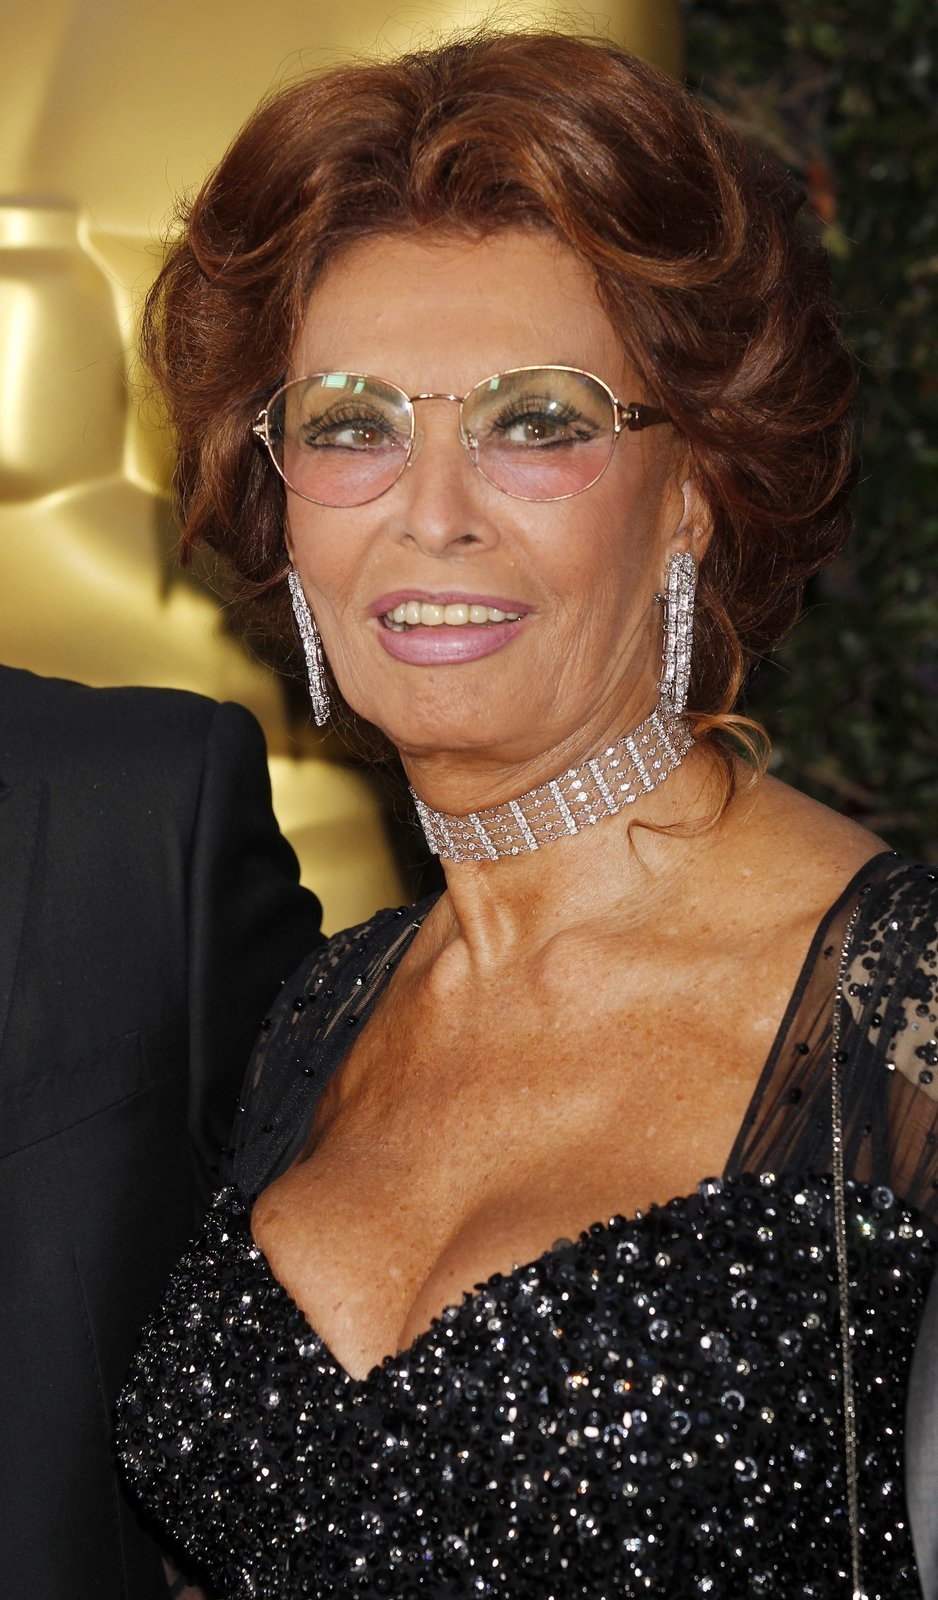 Sophia Loren 79 let